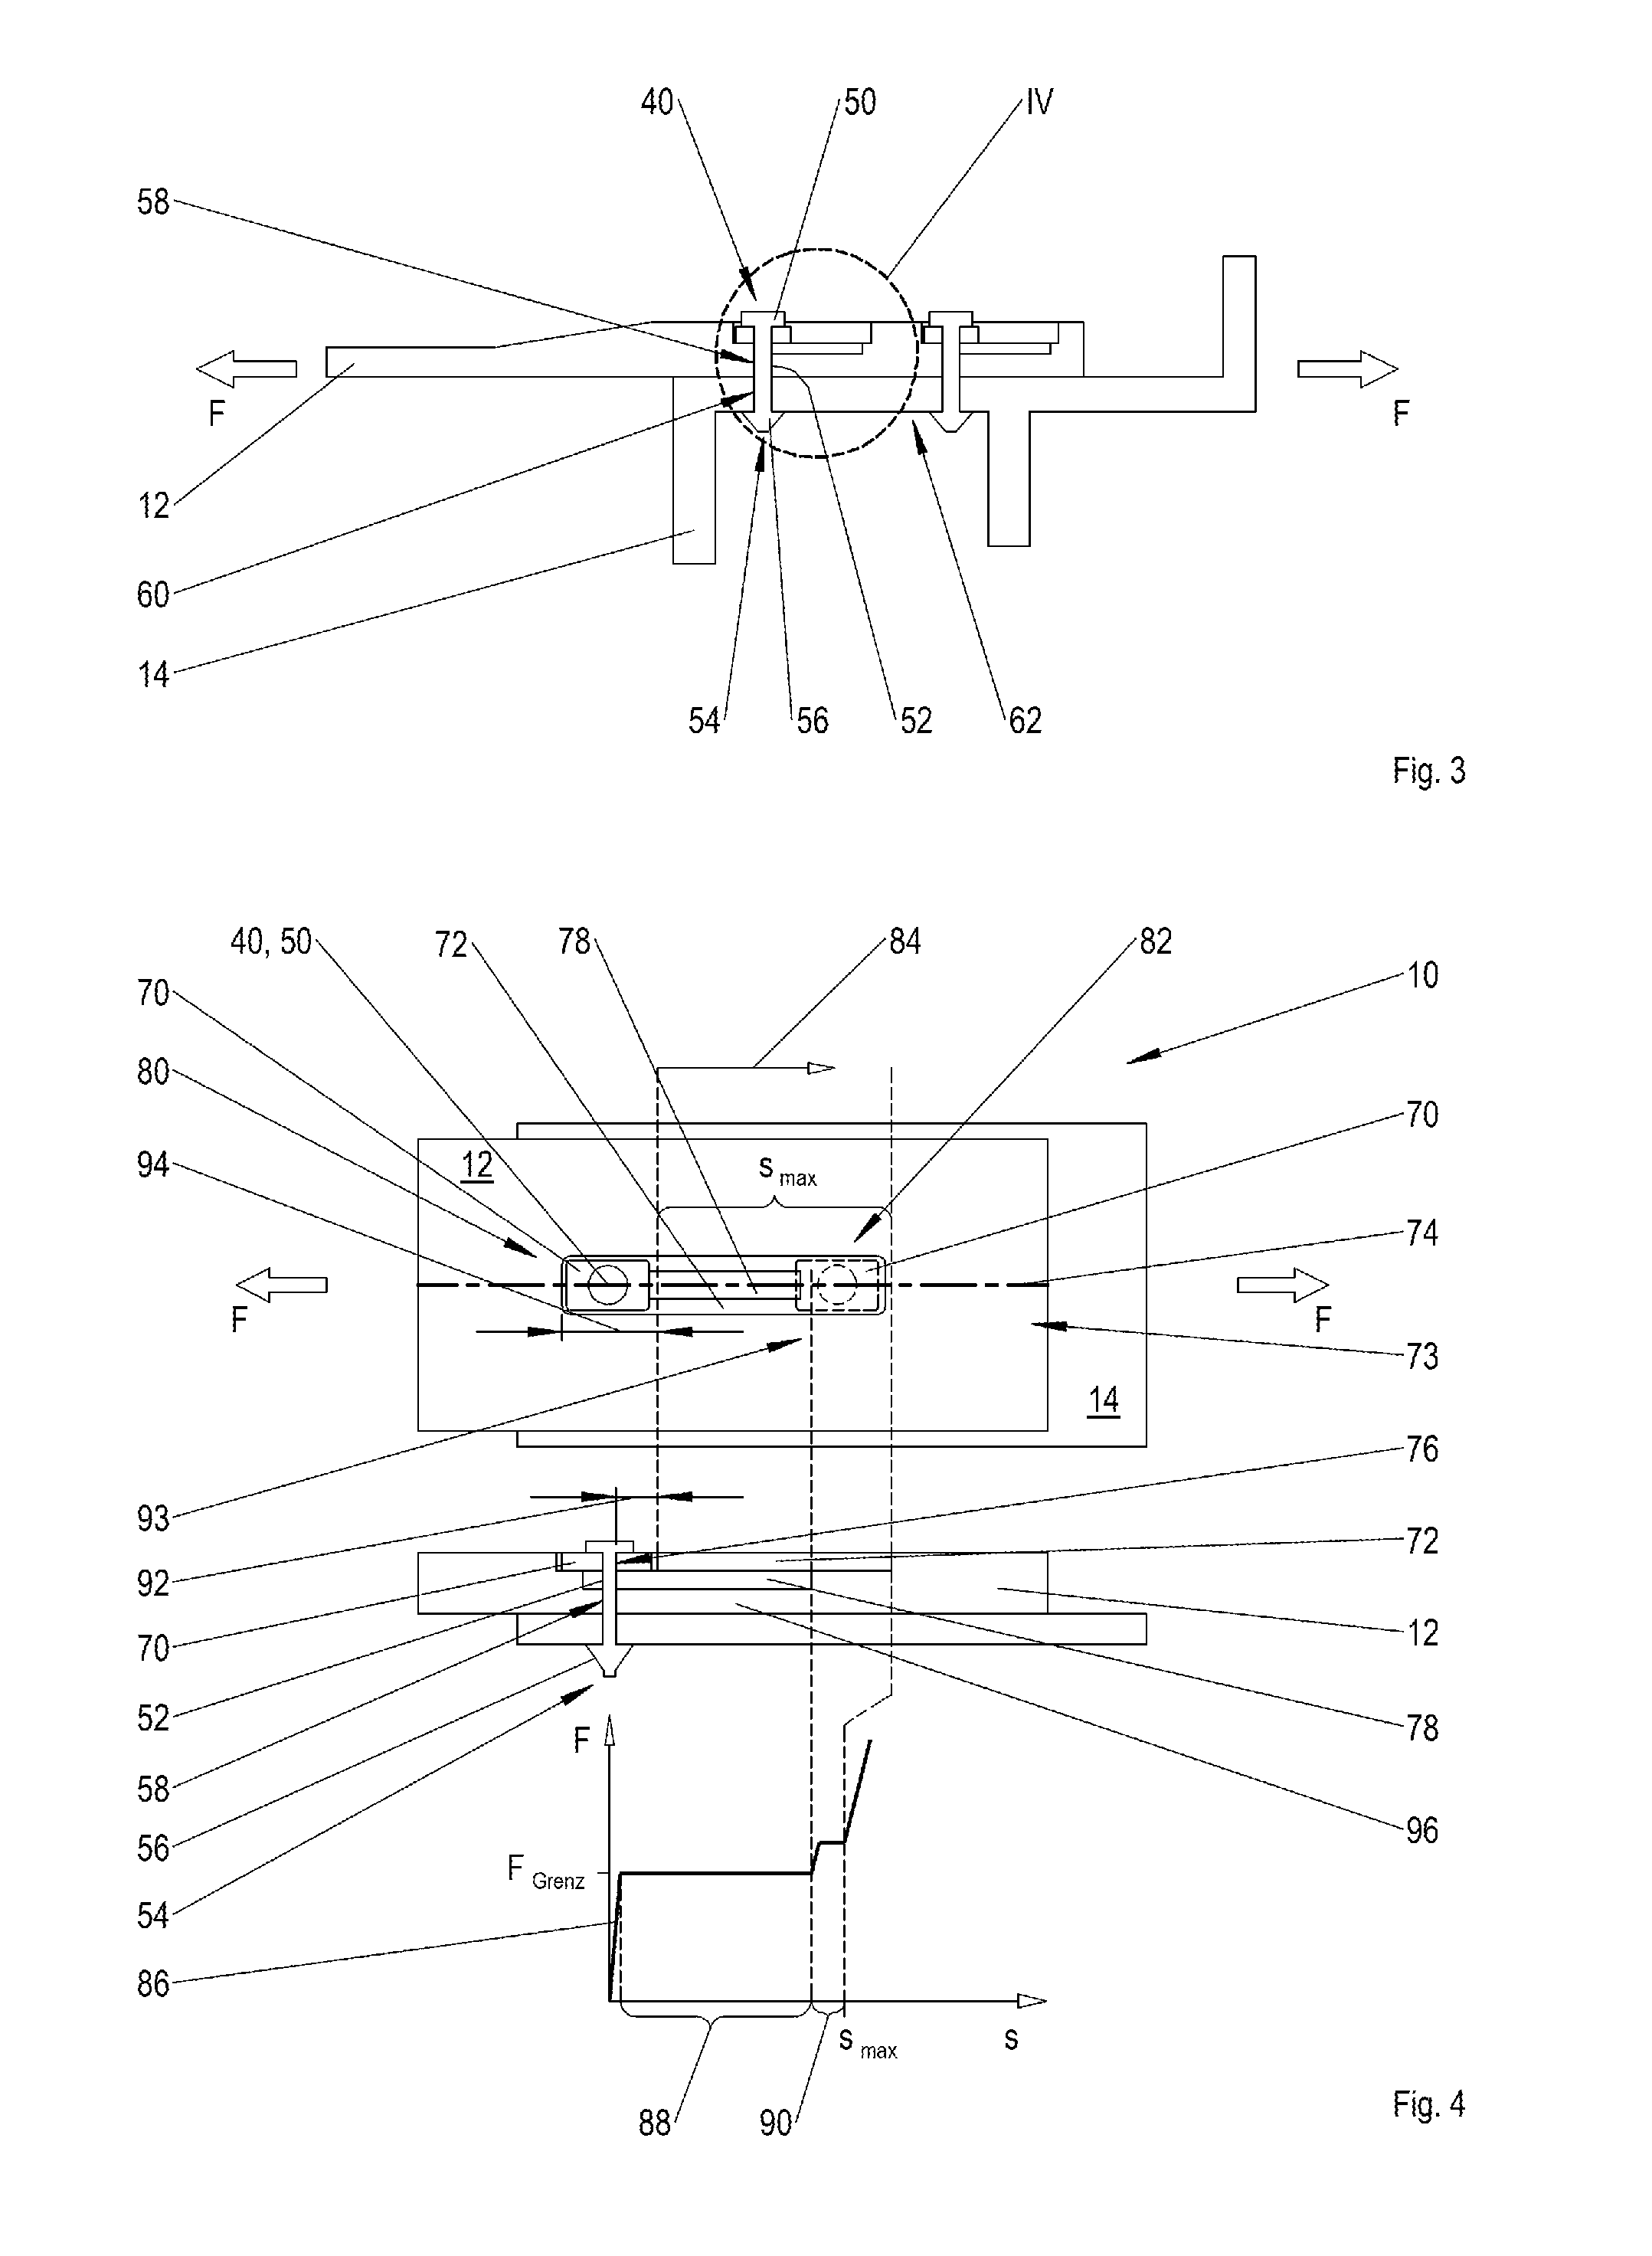 Connection arrangement and structure